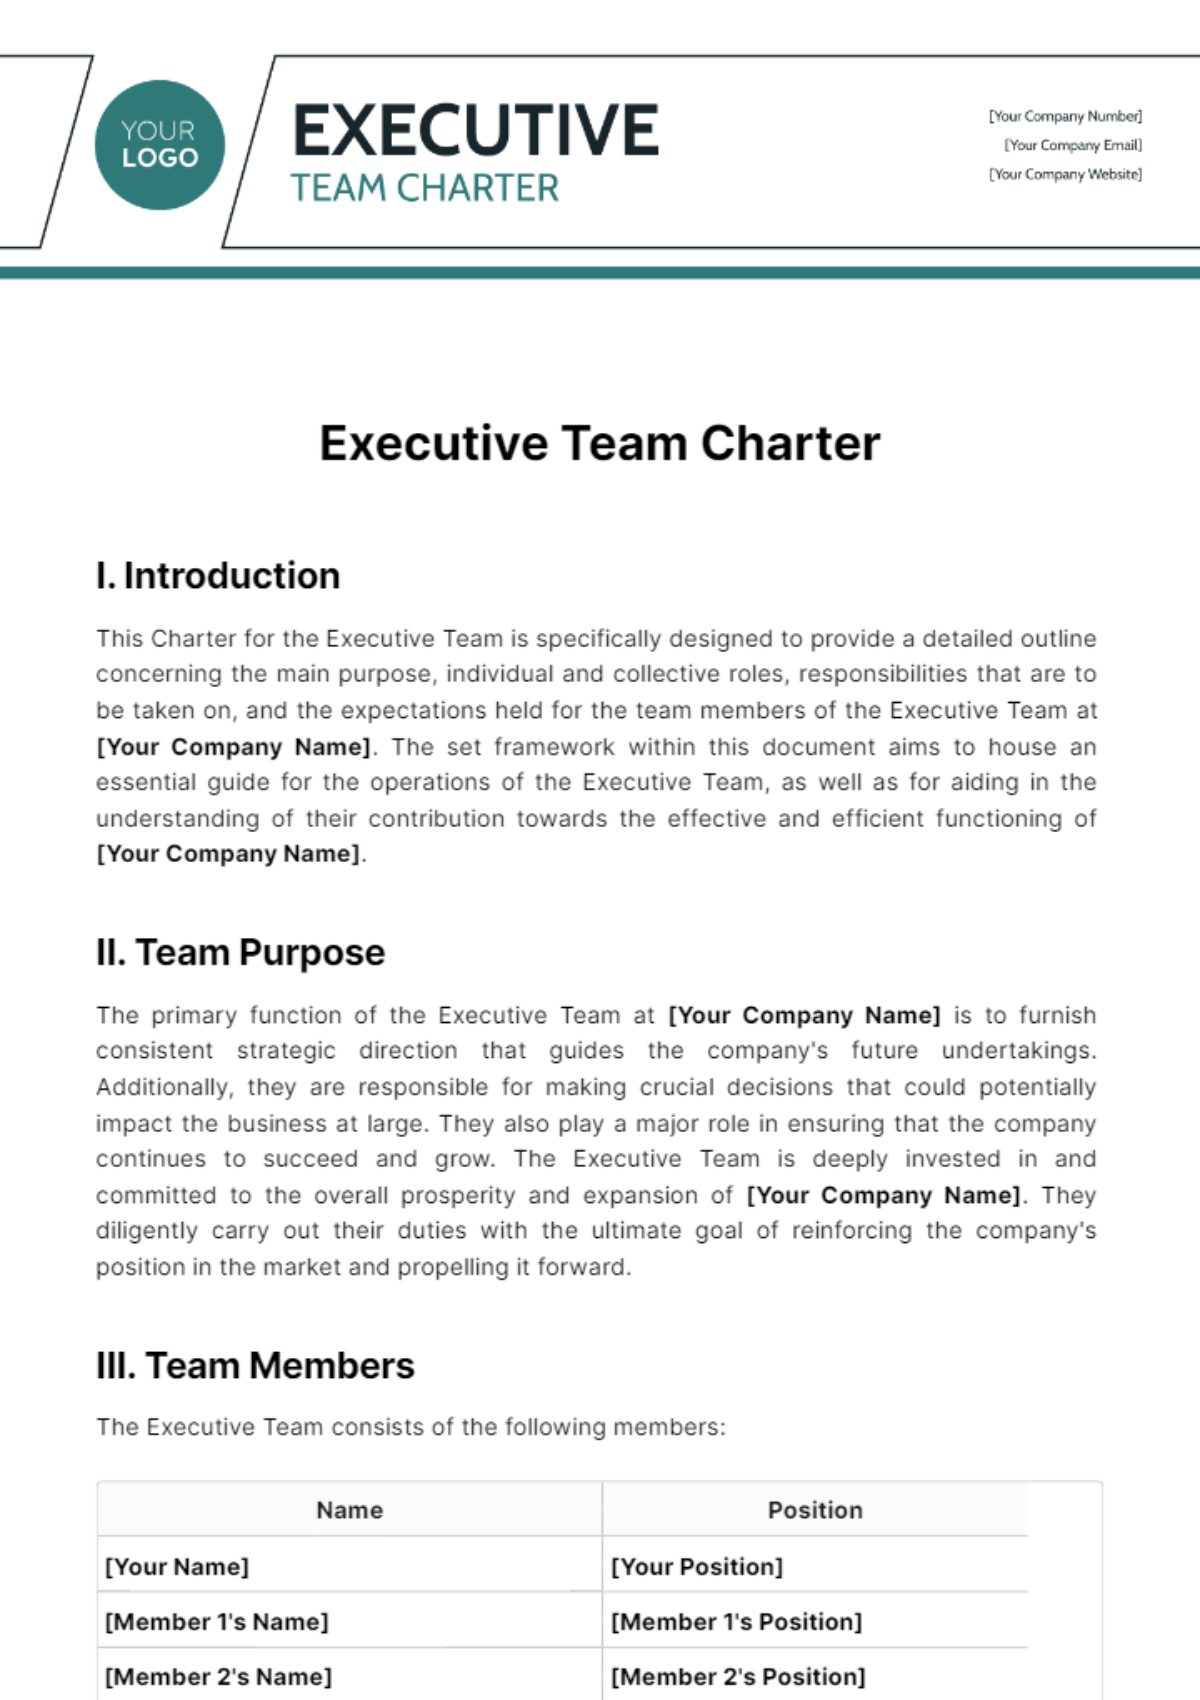 Executive Team Charter Template